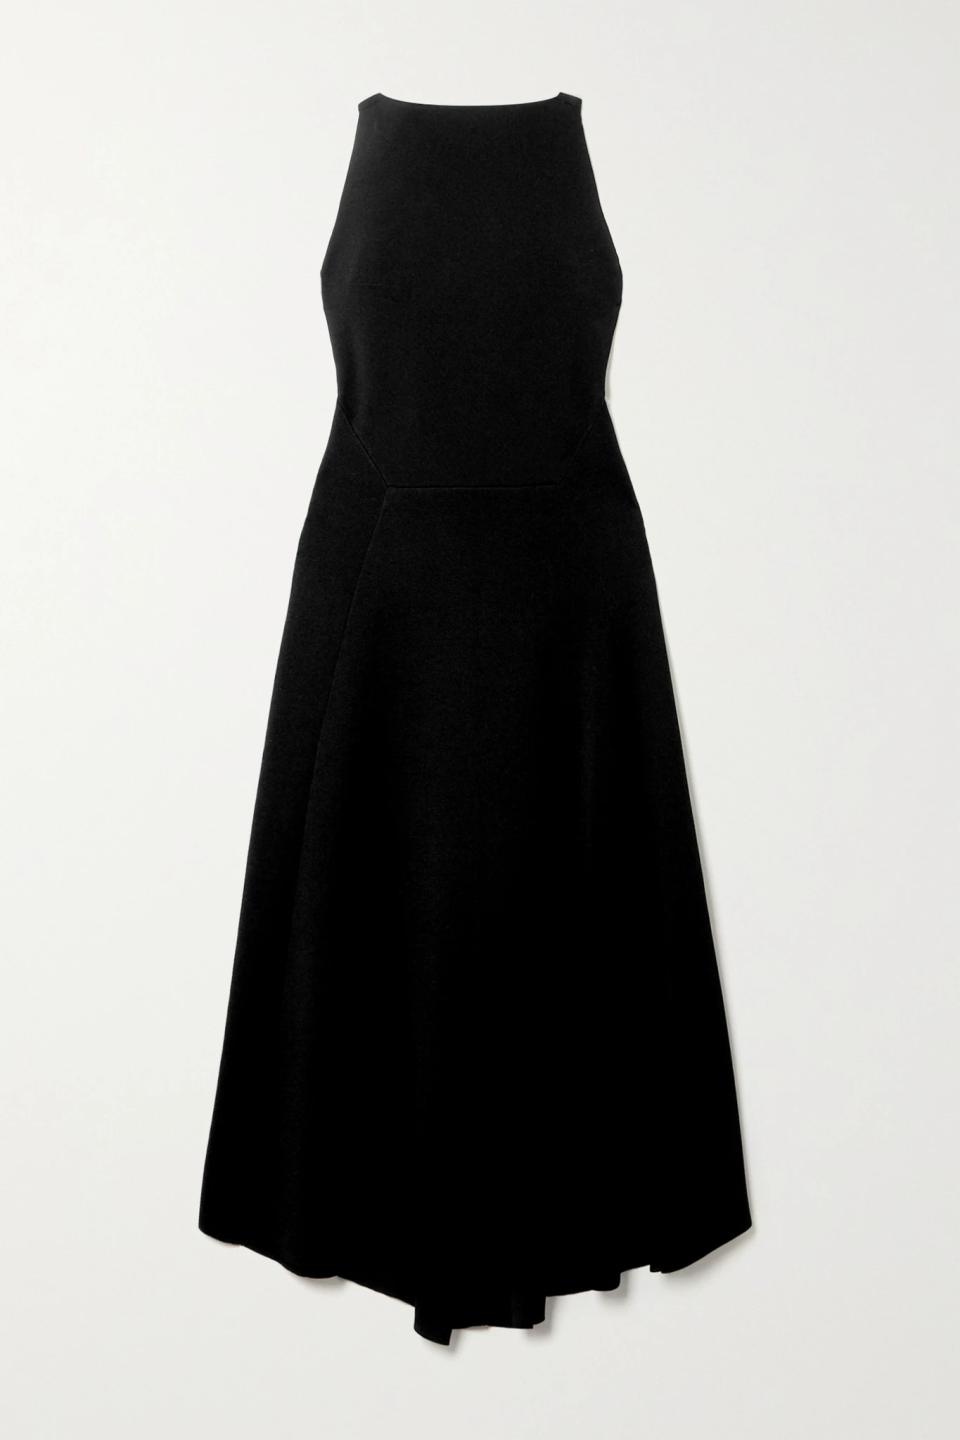 Victoria Beckham Cutout Jersey Midi Dress